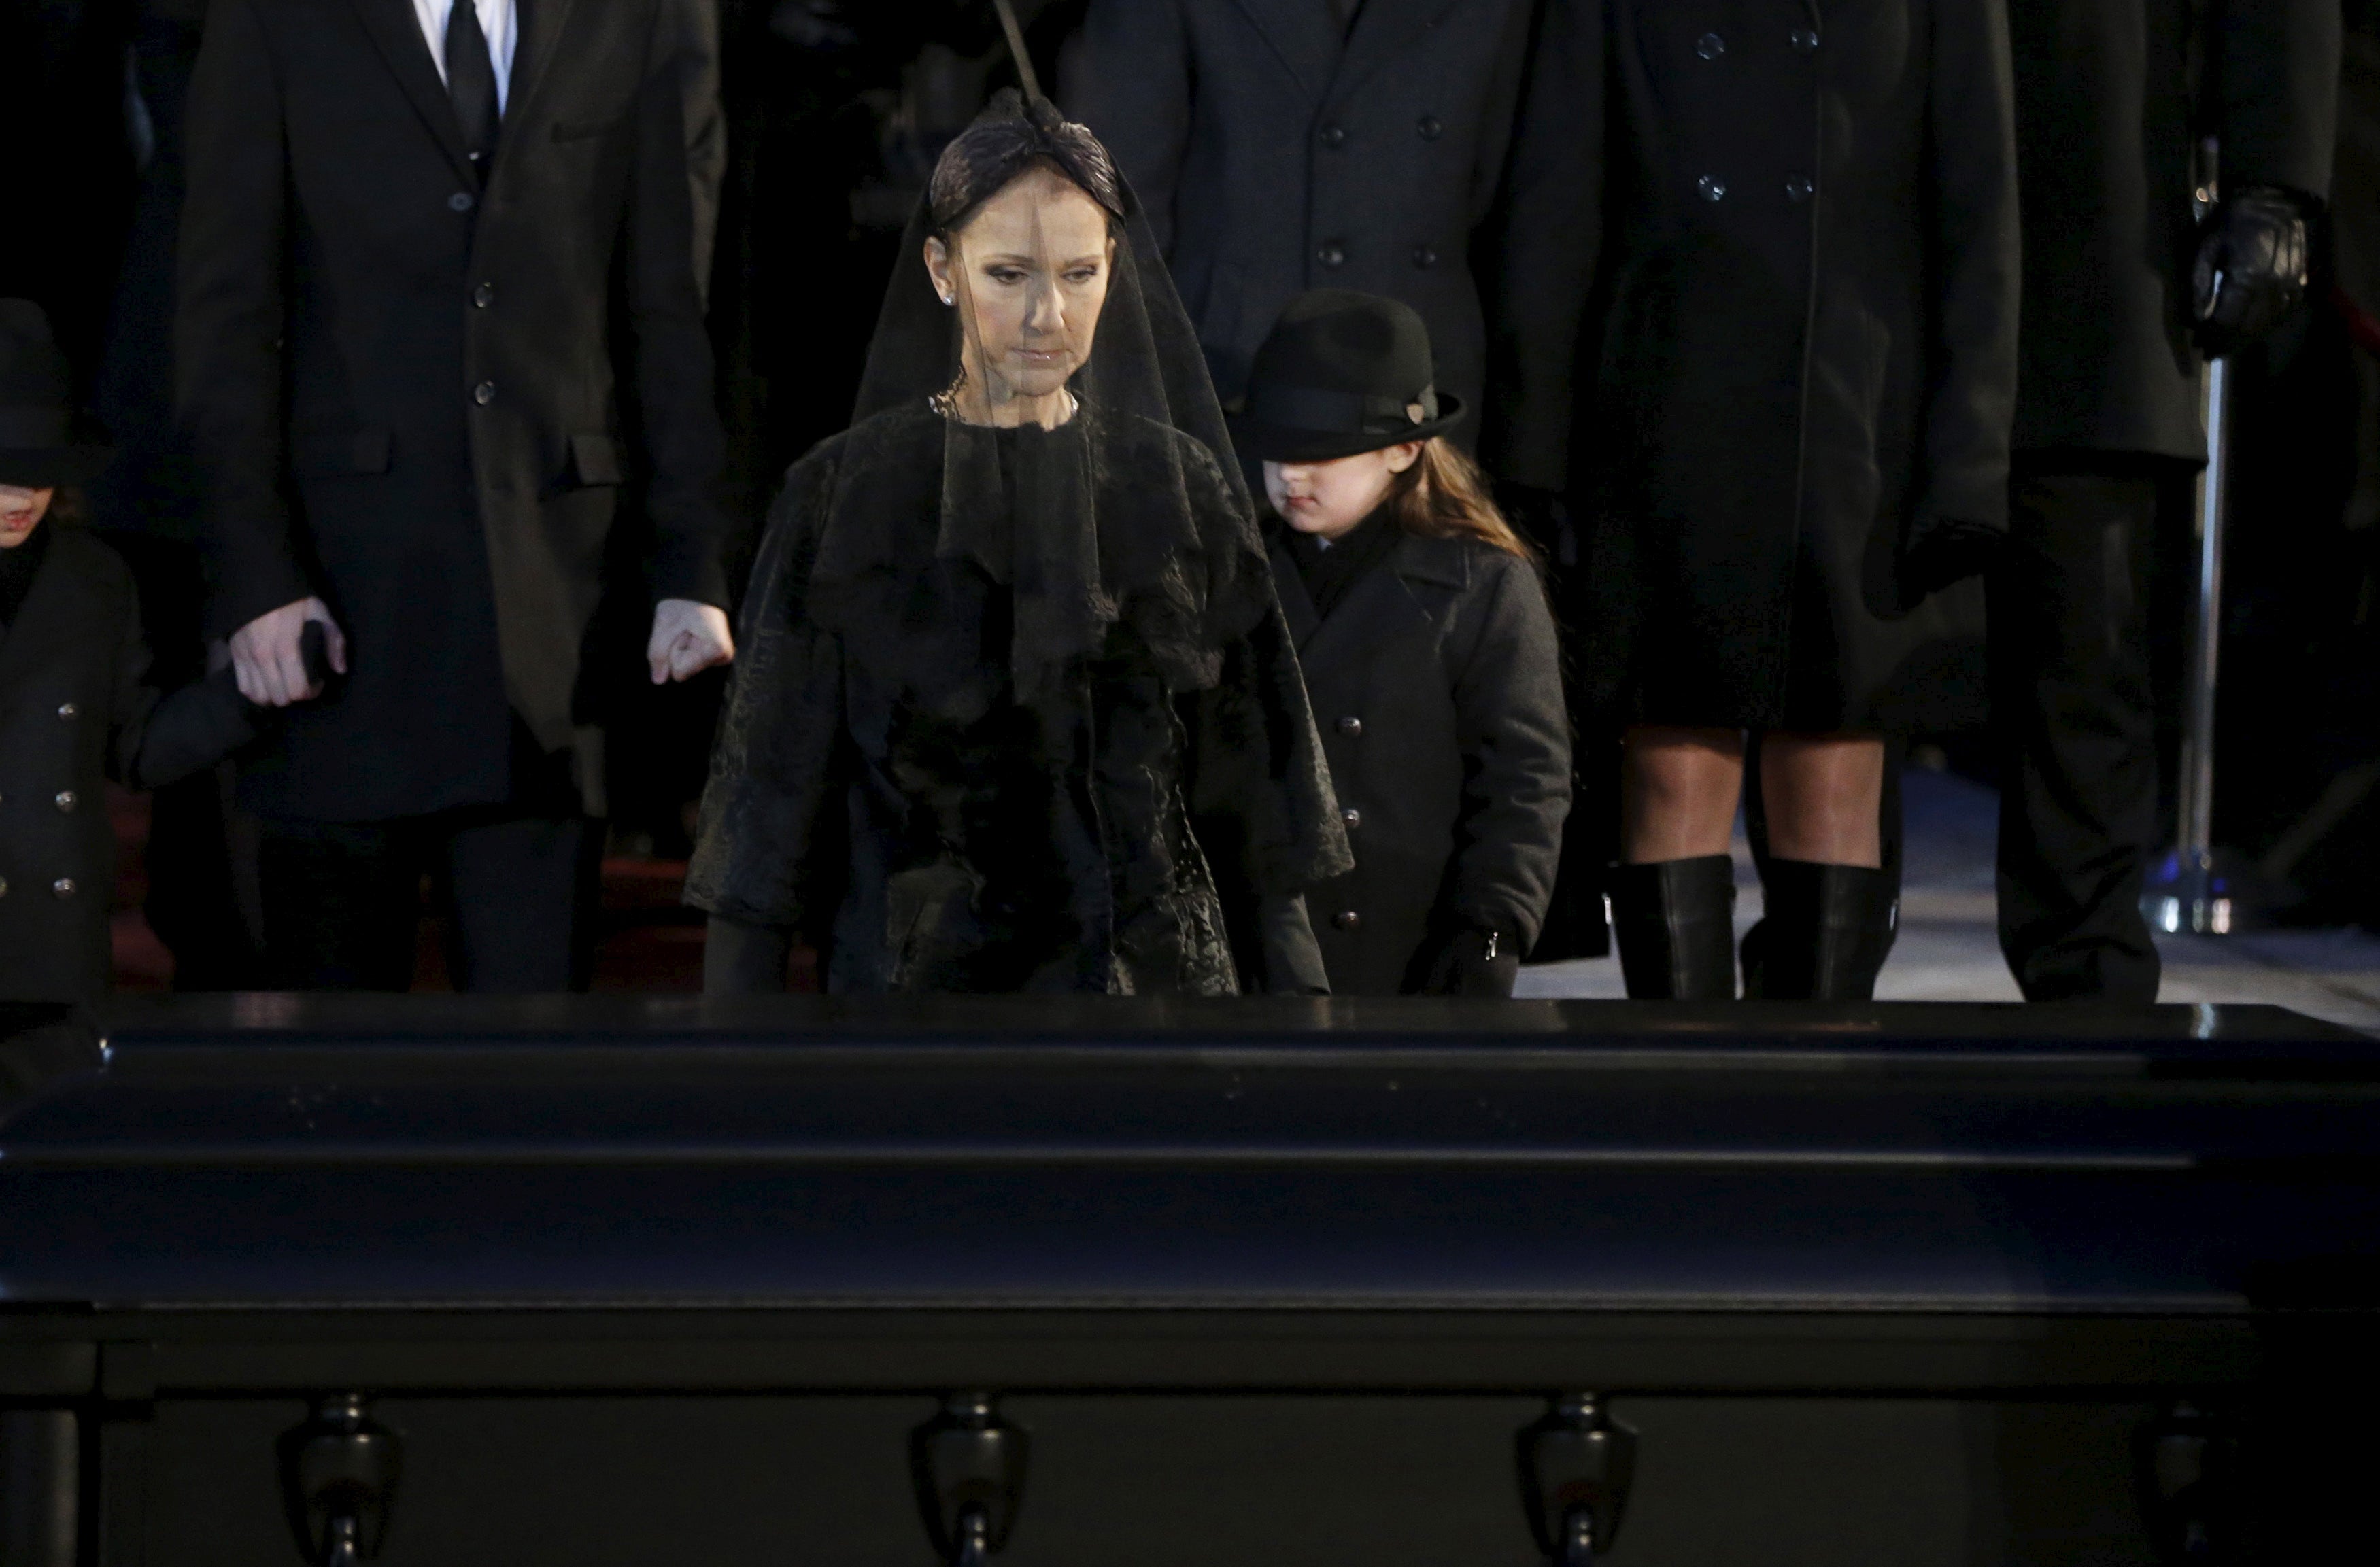 Céline Dion bids emotional final farewell to late husband Rene Angelil